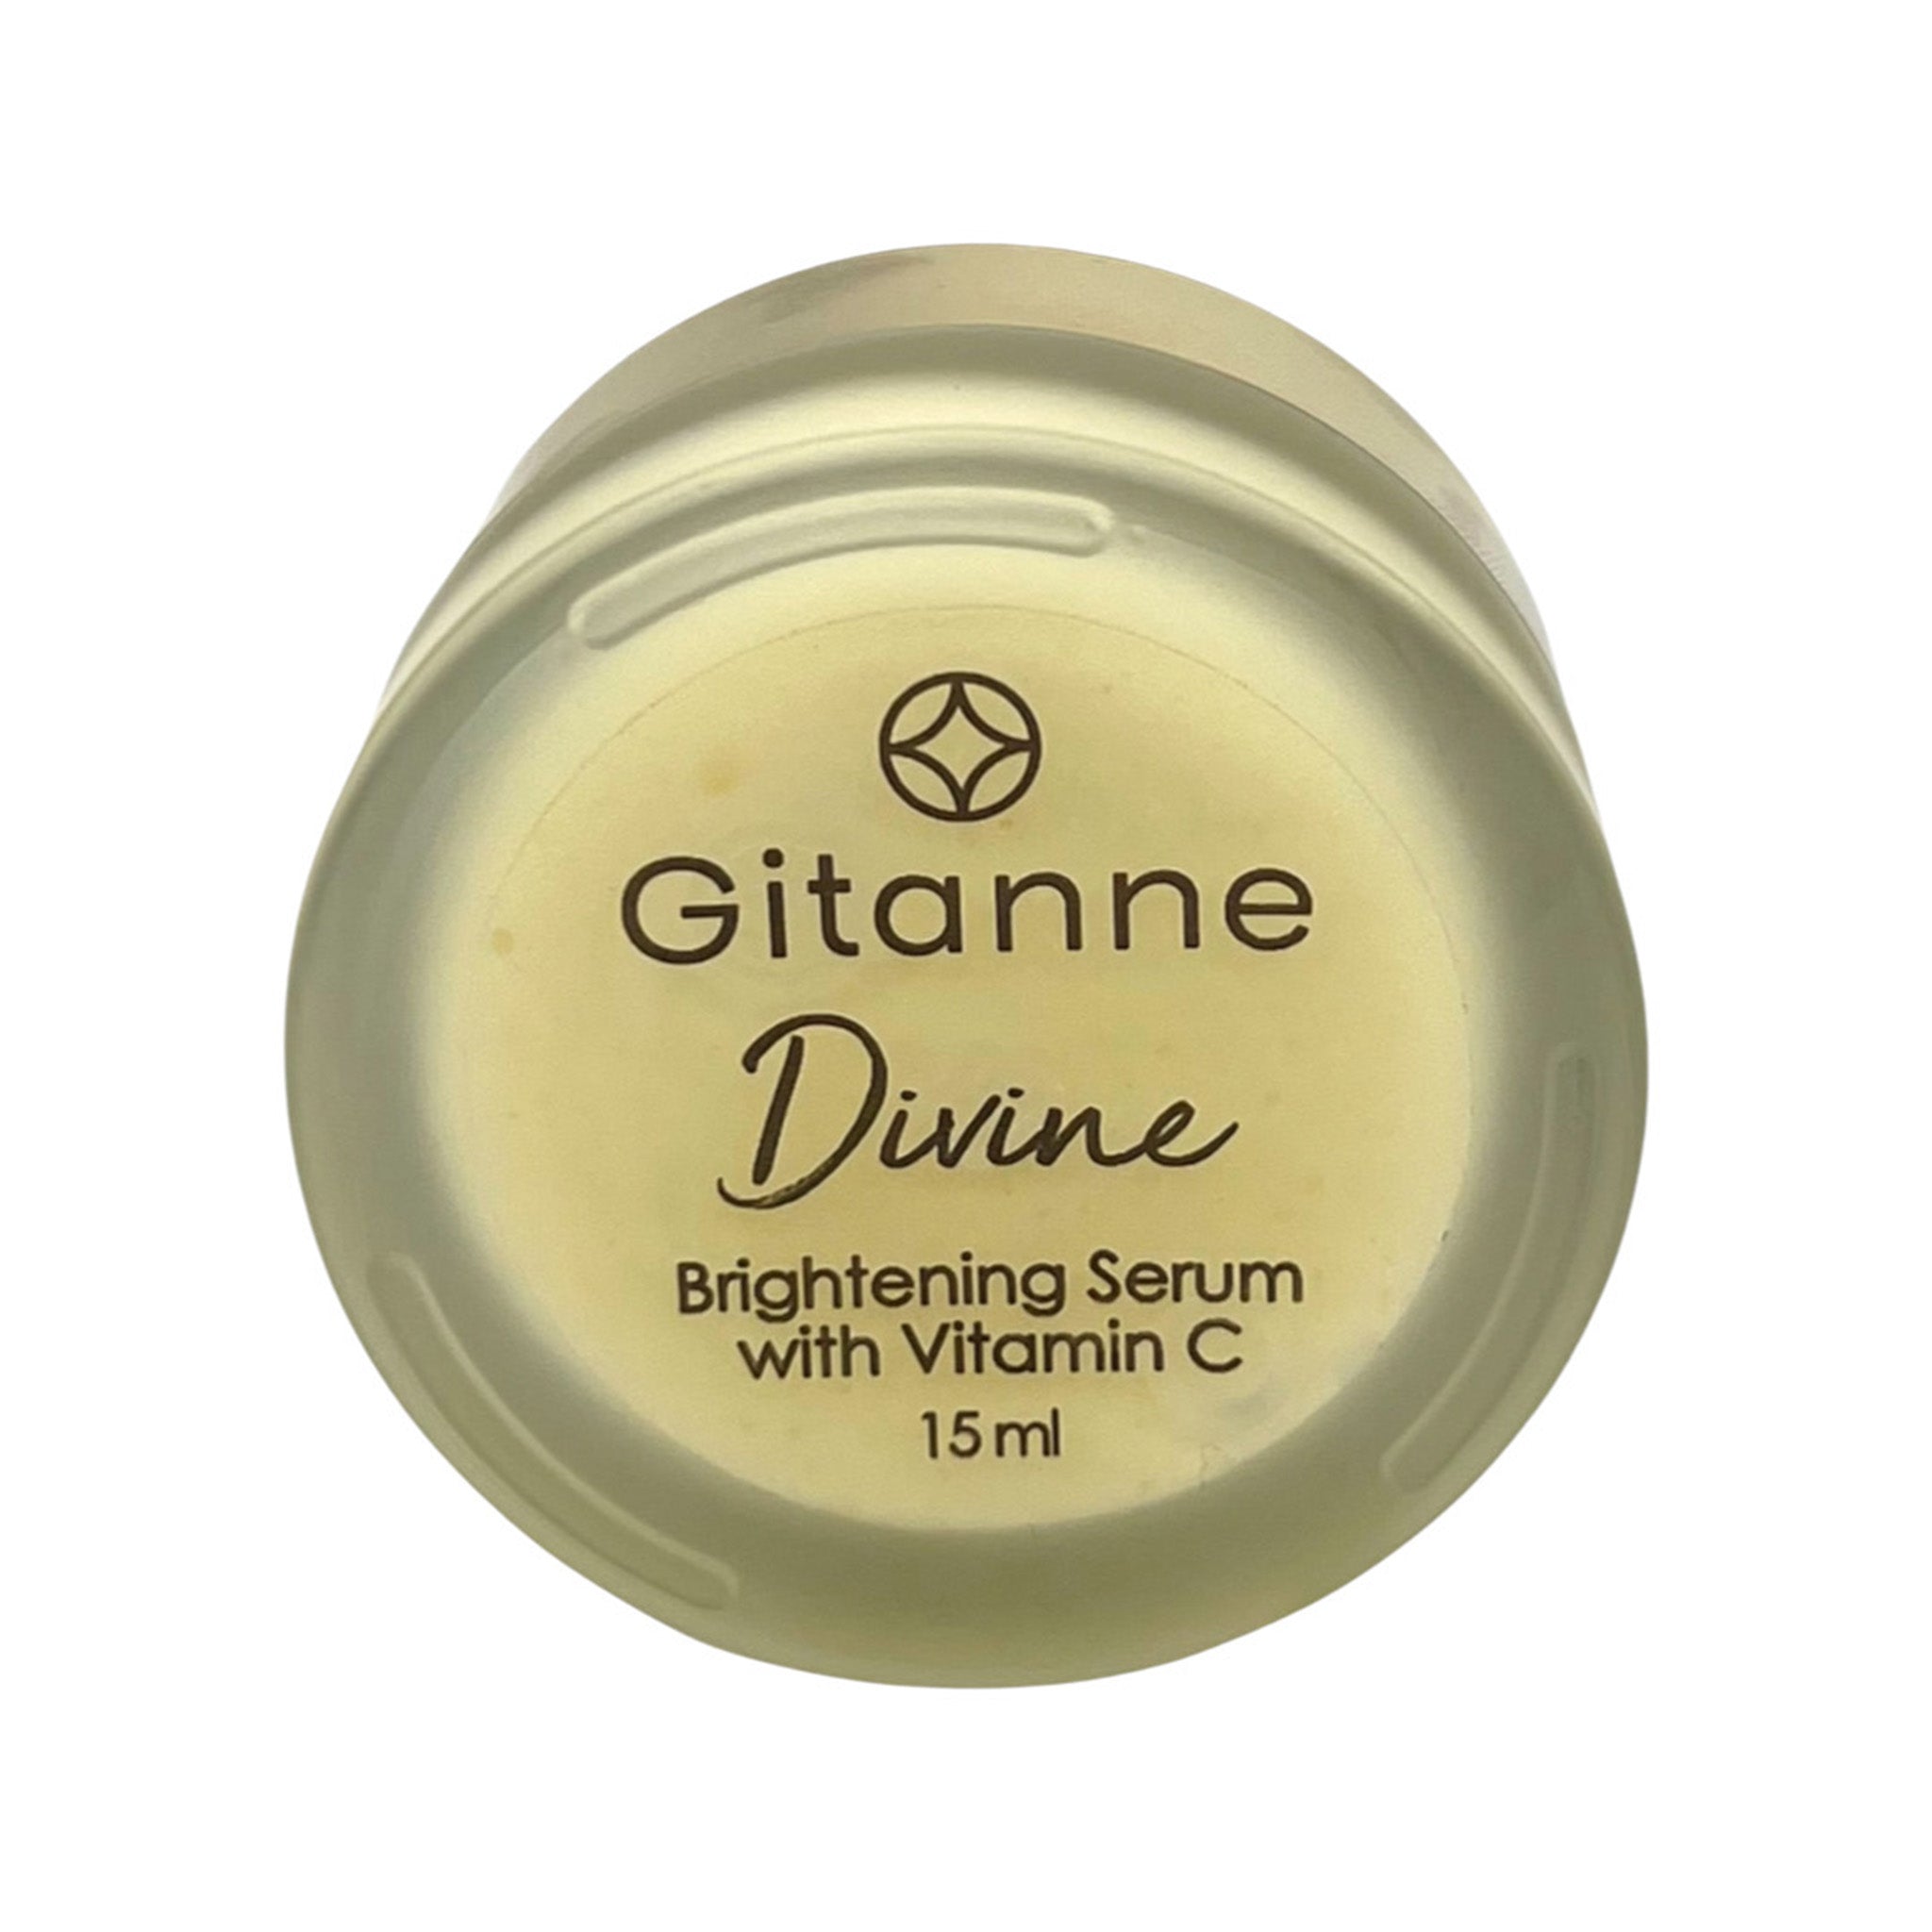 Gitanne Skincare Divine Vitamin C Pressed Serum improves skin discoloration and fine lines and wrinkles.